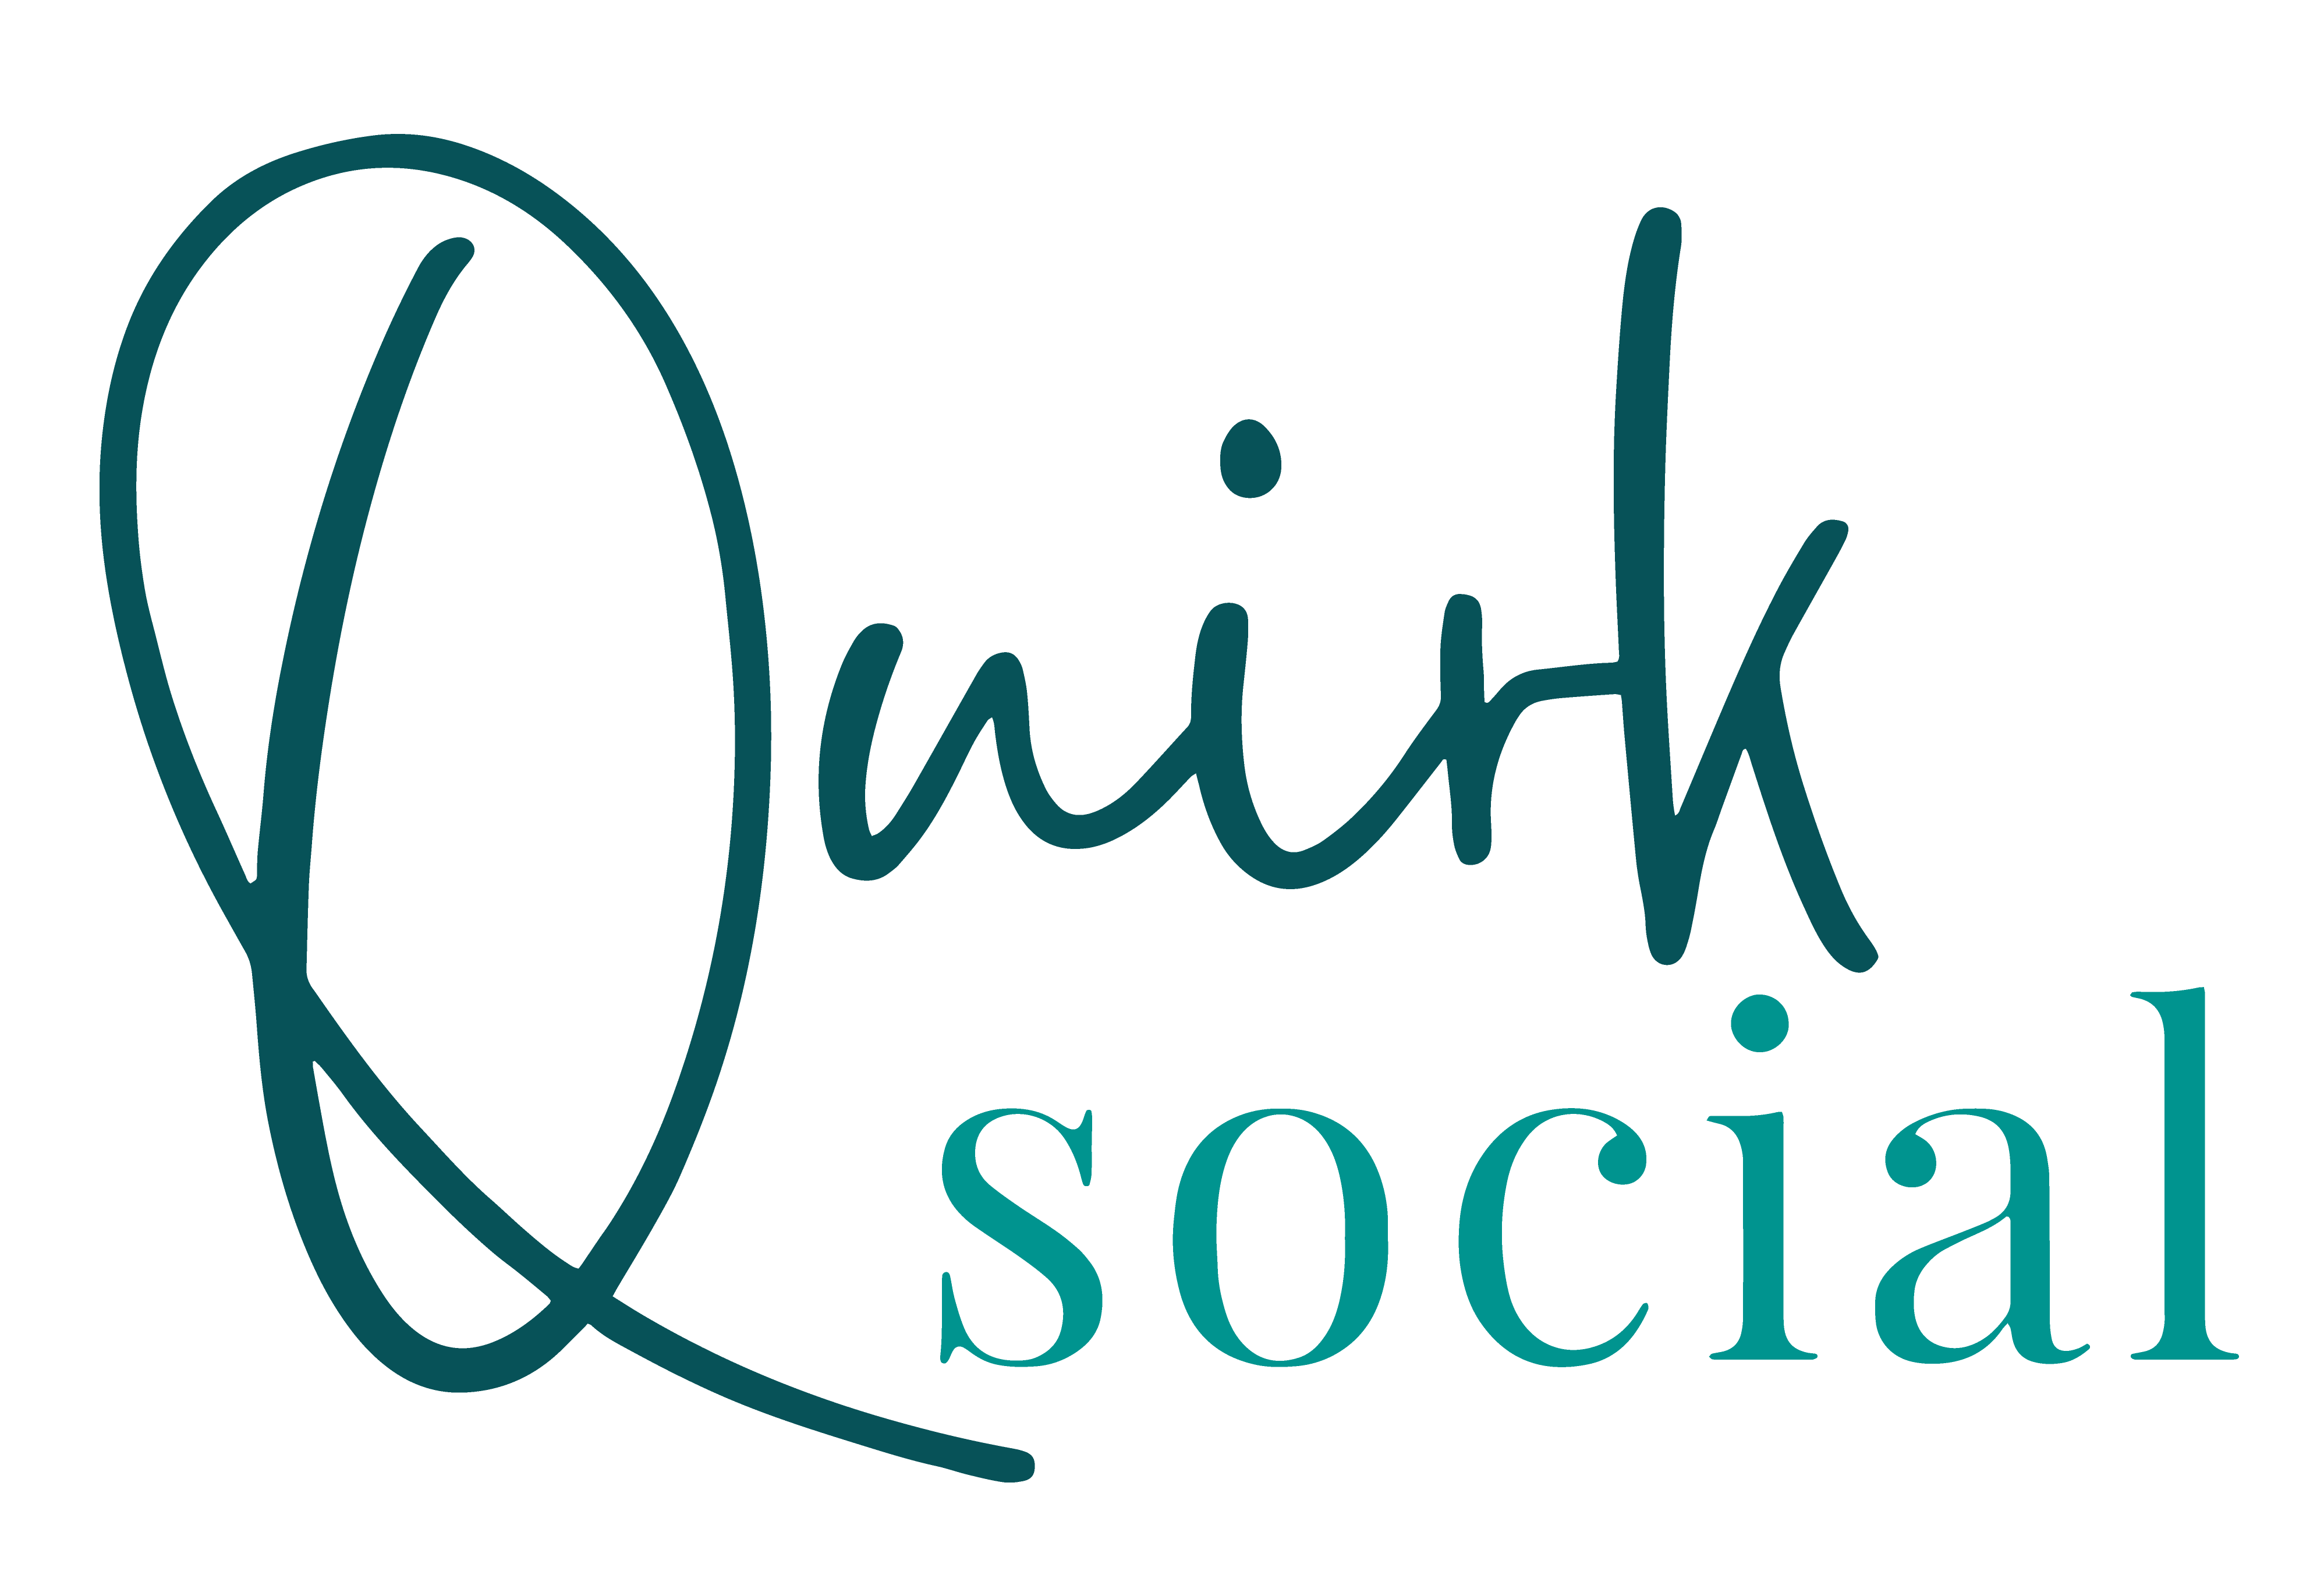 Quirk Social